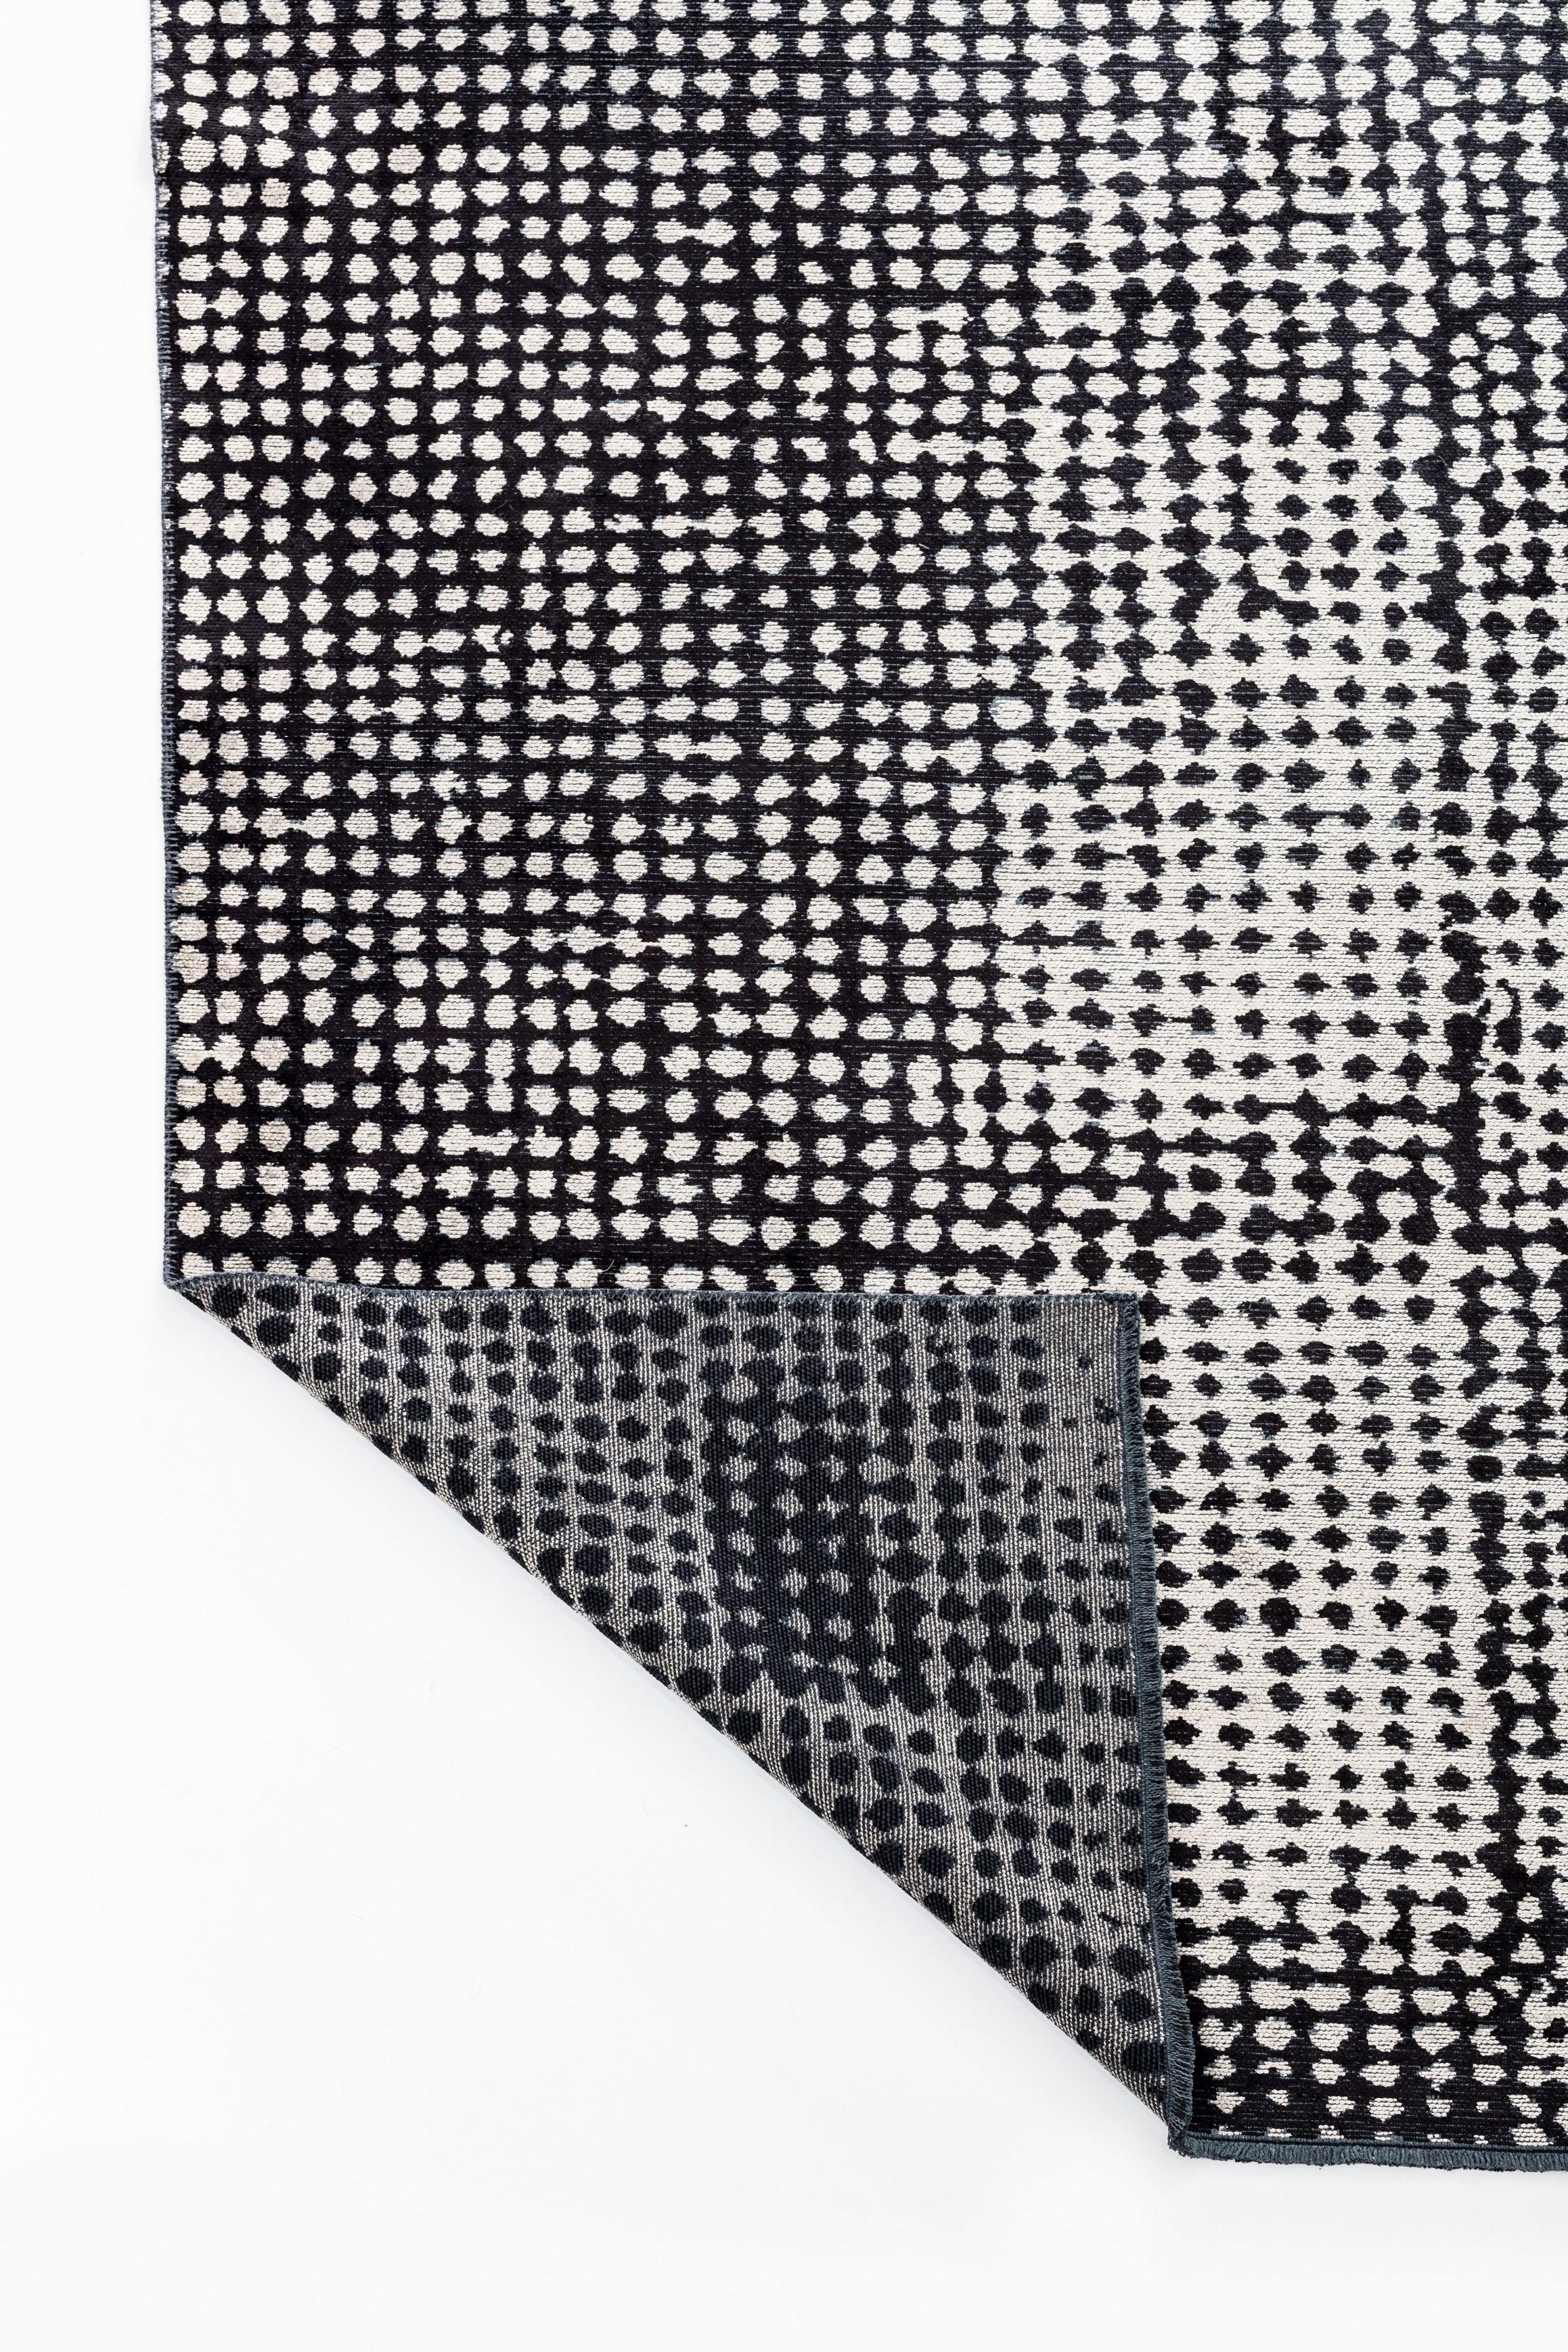 For Sale:  (Beige) Modern Polka Dots Luxury Hand-Finished Area Rug 3